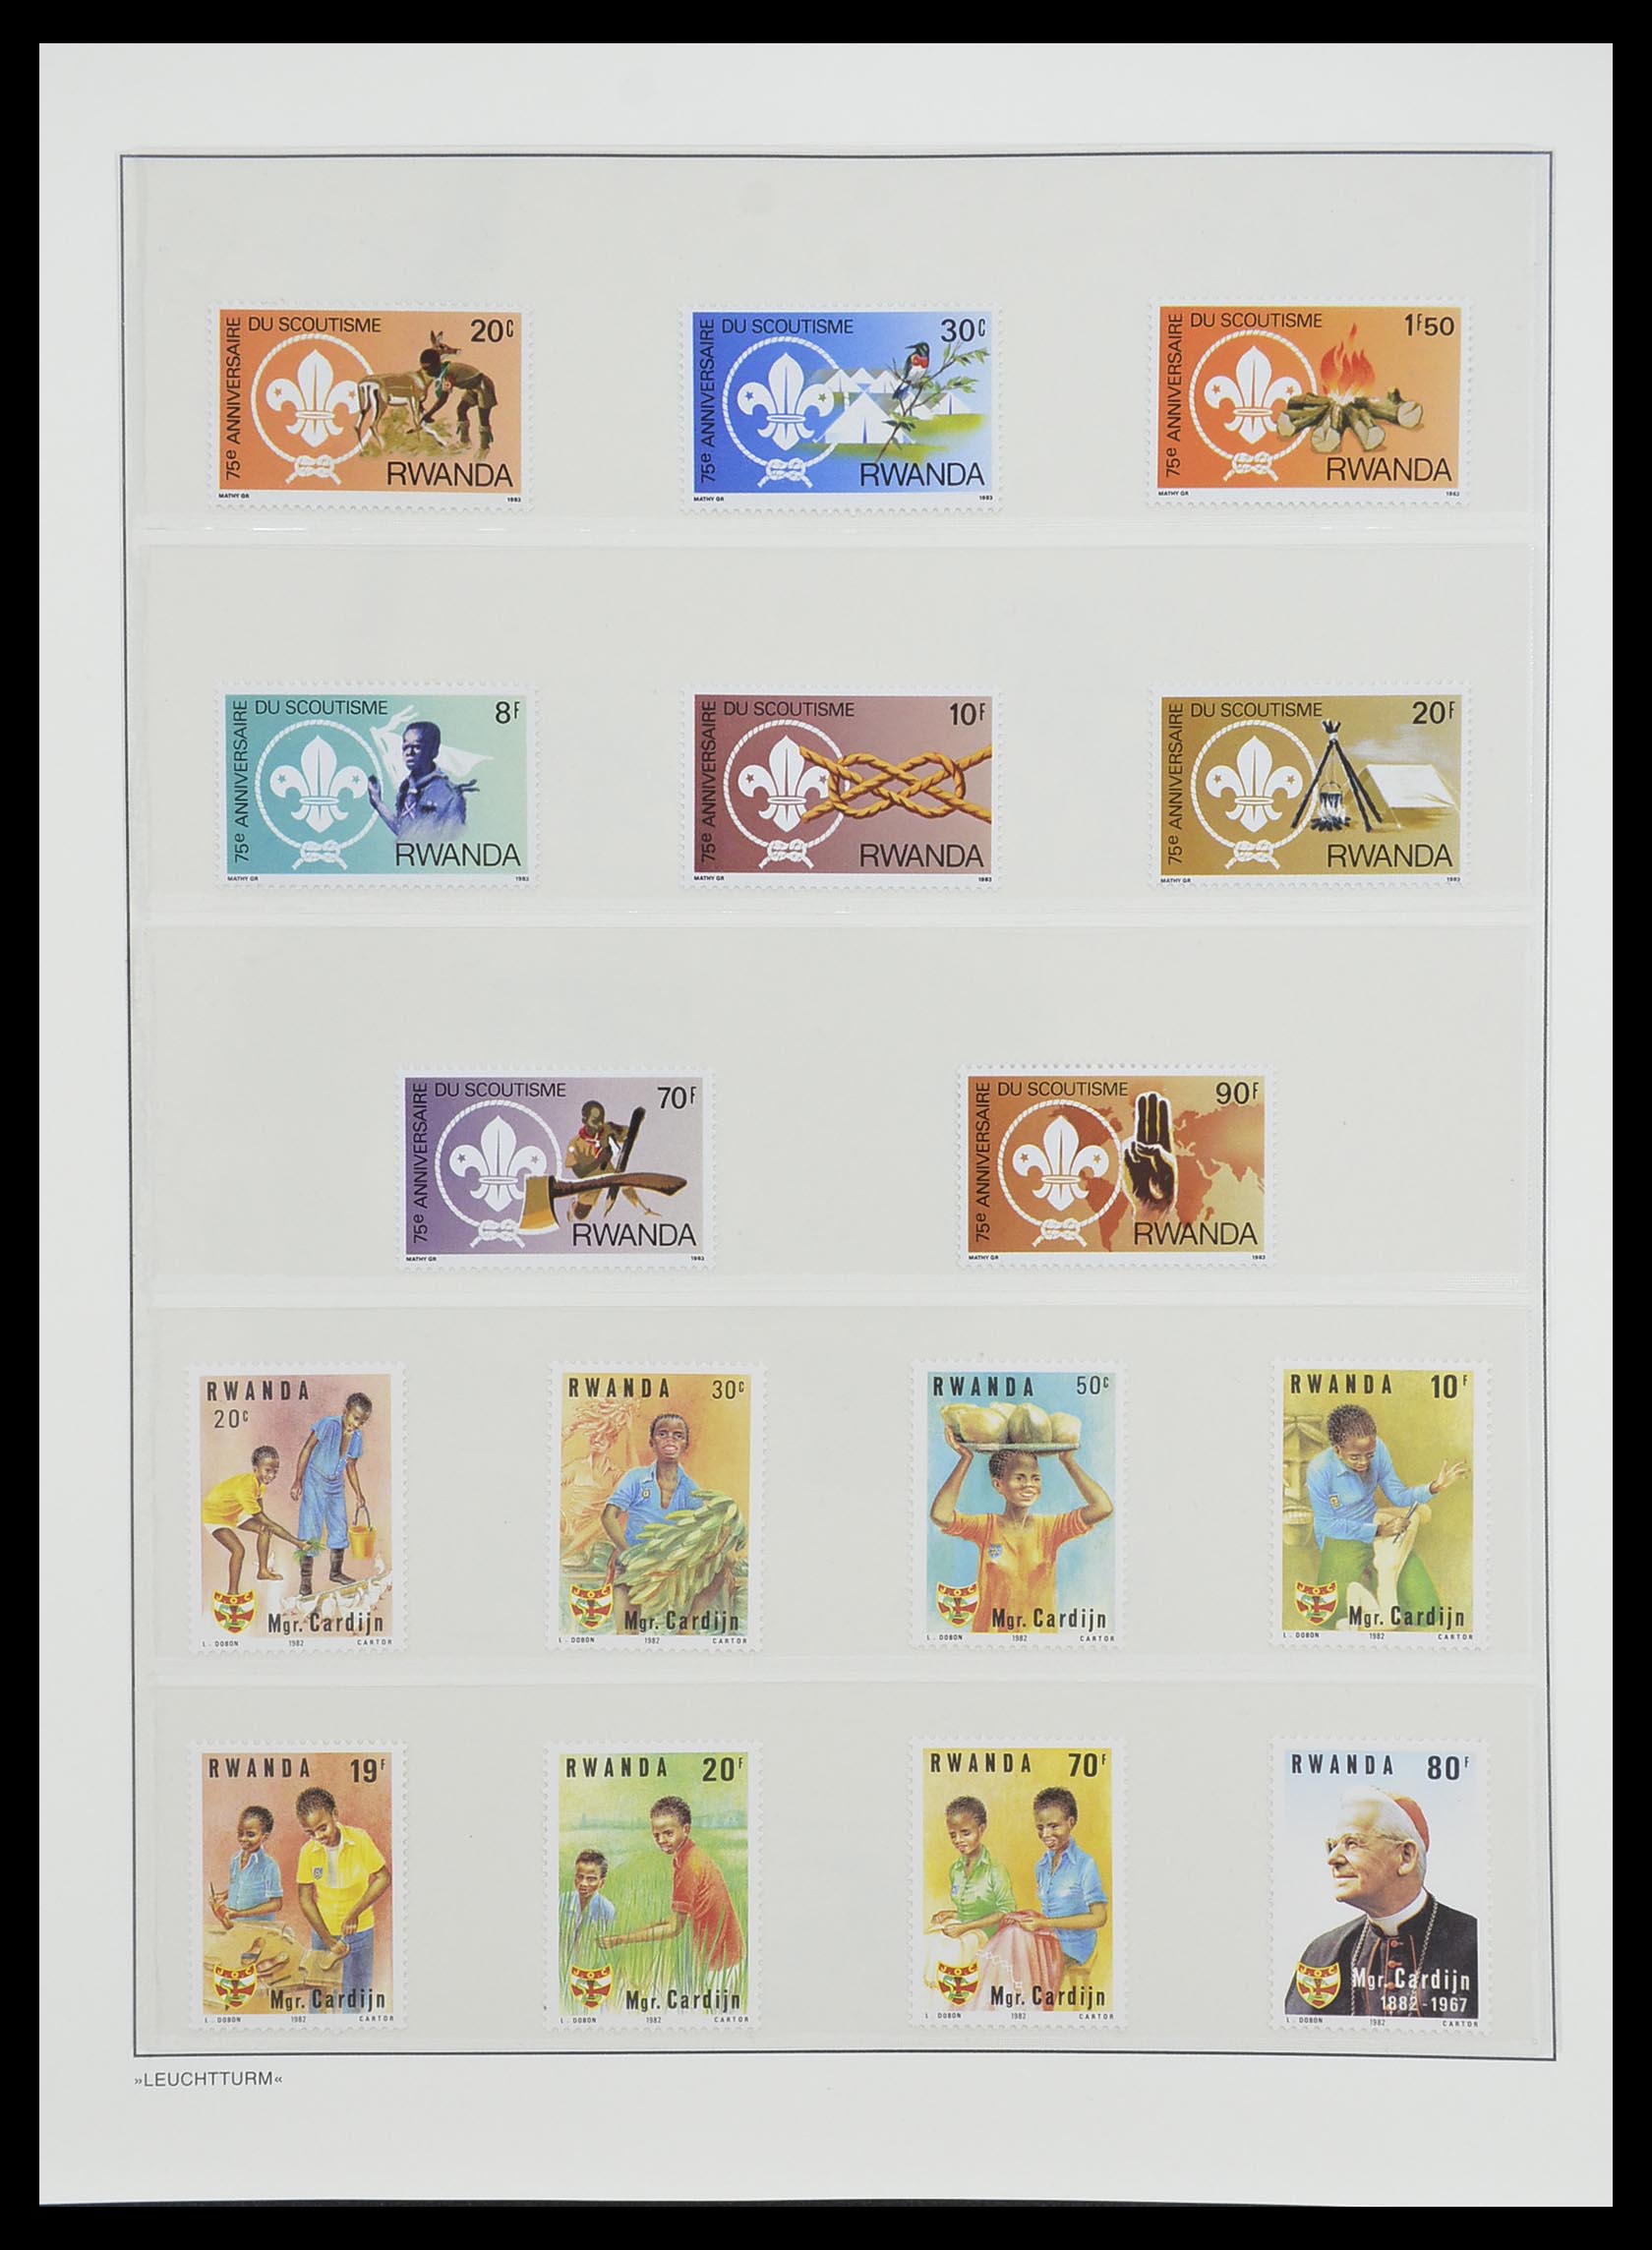 33766 125 - Stamp collection 33766 Rwanda 1962-1999.